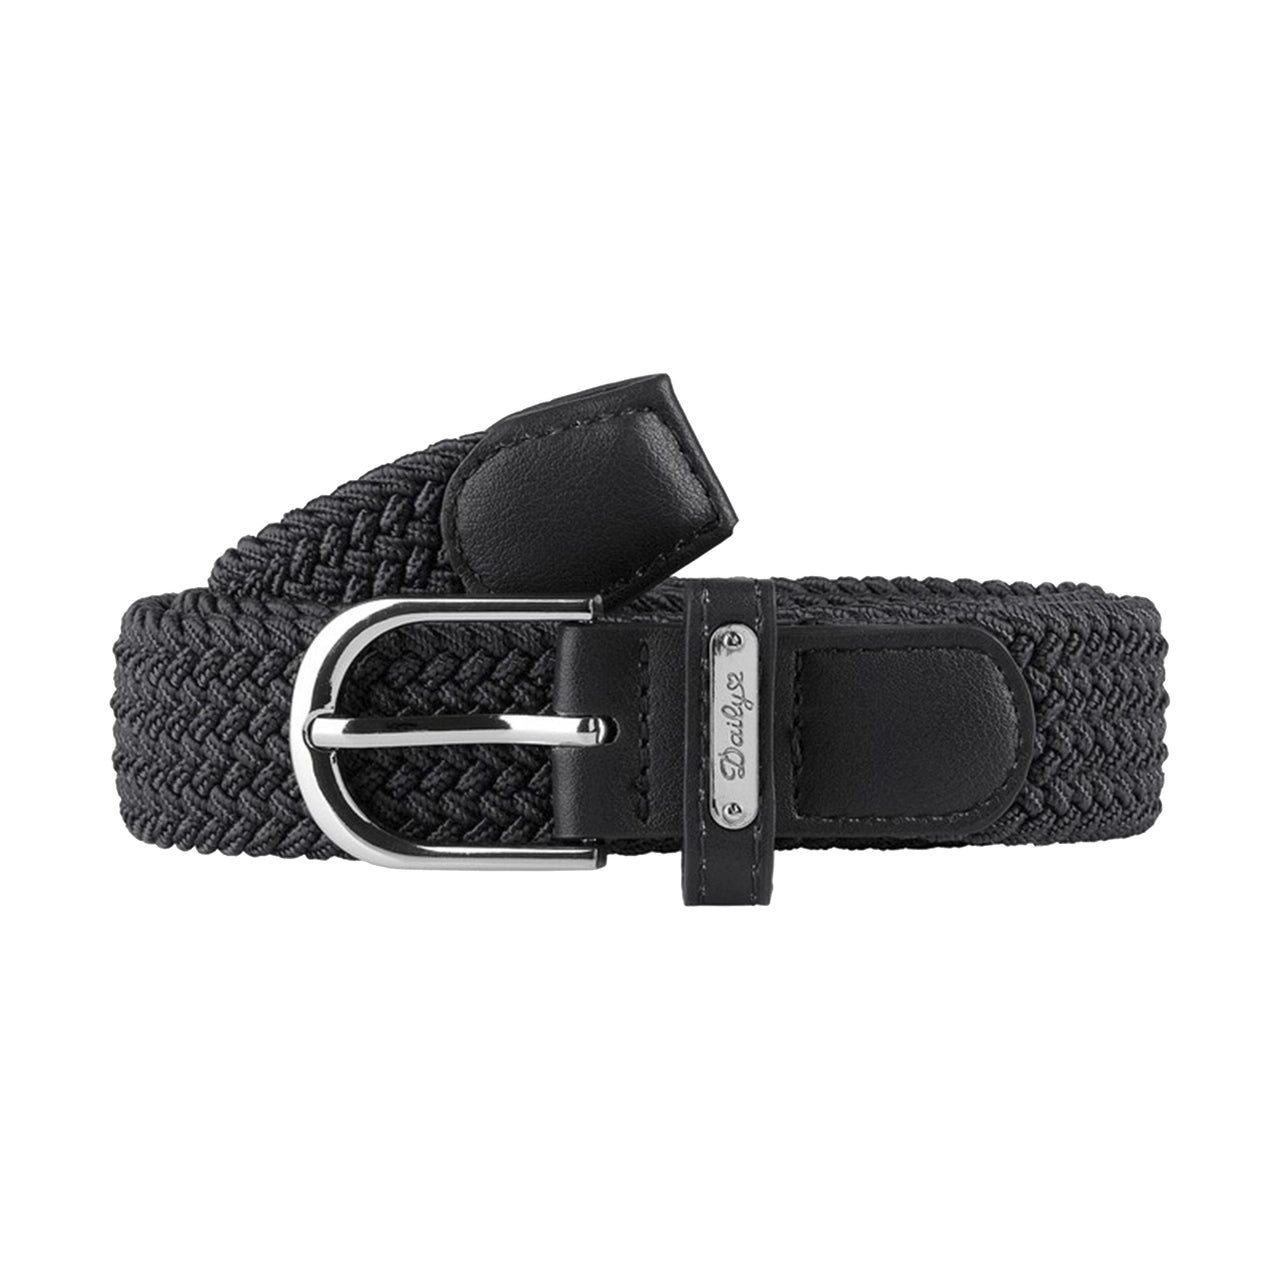 Daily Sports- Adjustable Giselle Elastic Belt Black (Style#: 601/640s22)